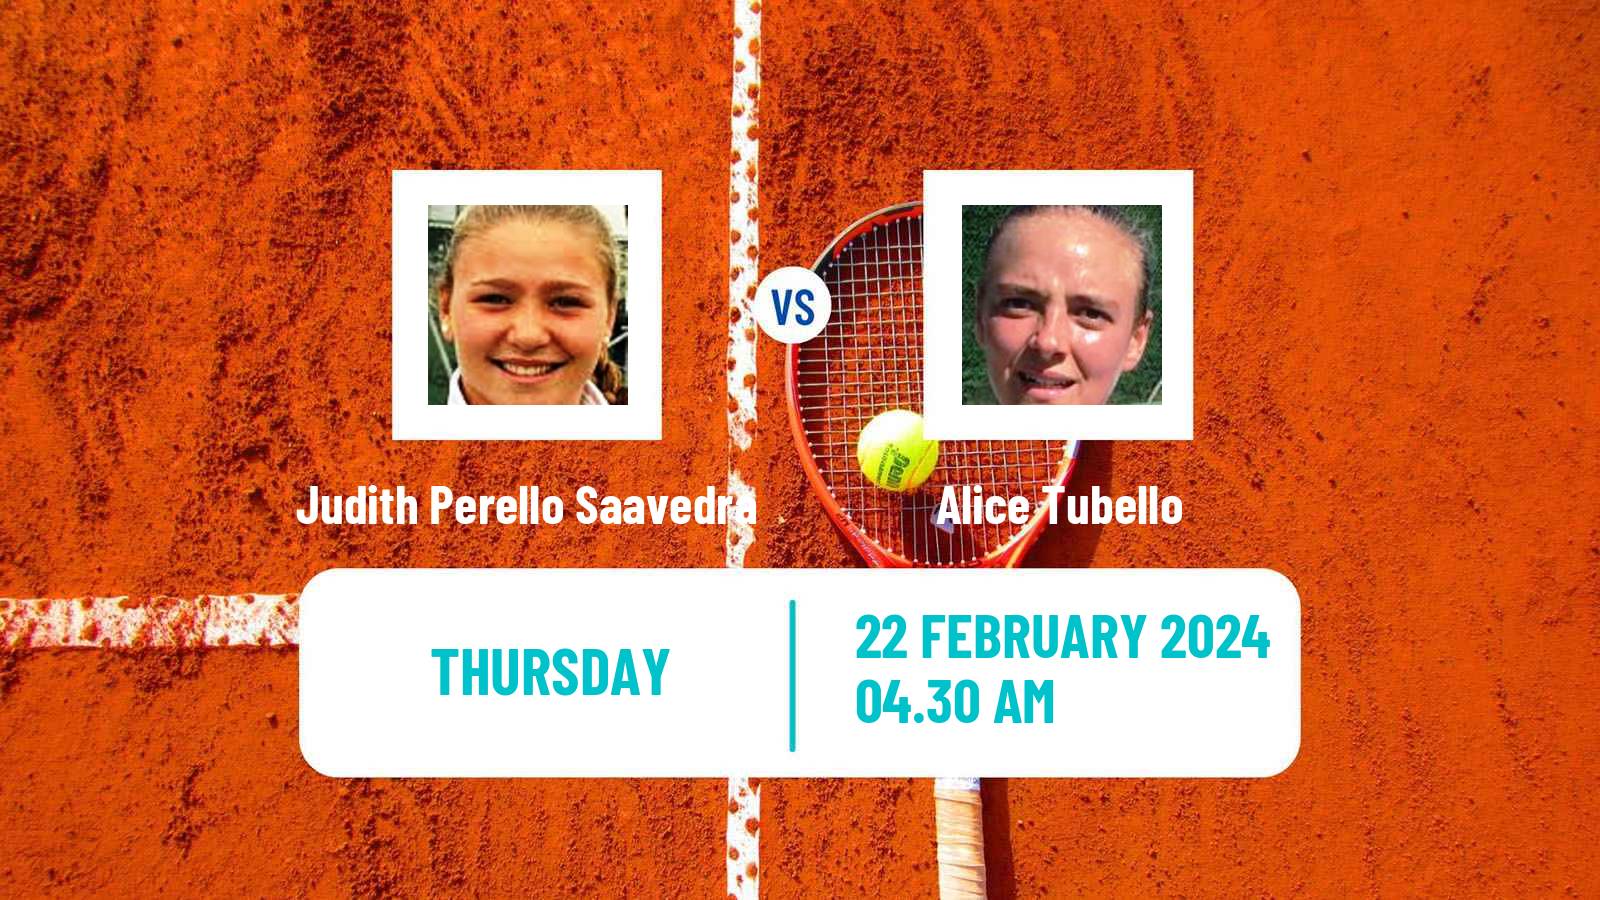 Tennis ITF W35 Hammamet 2 Women Judith Perello Saavedra - Alice Tubello